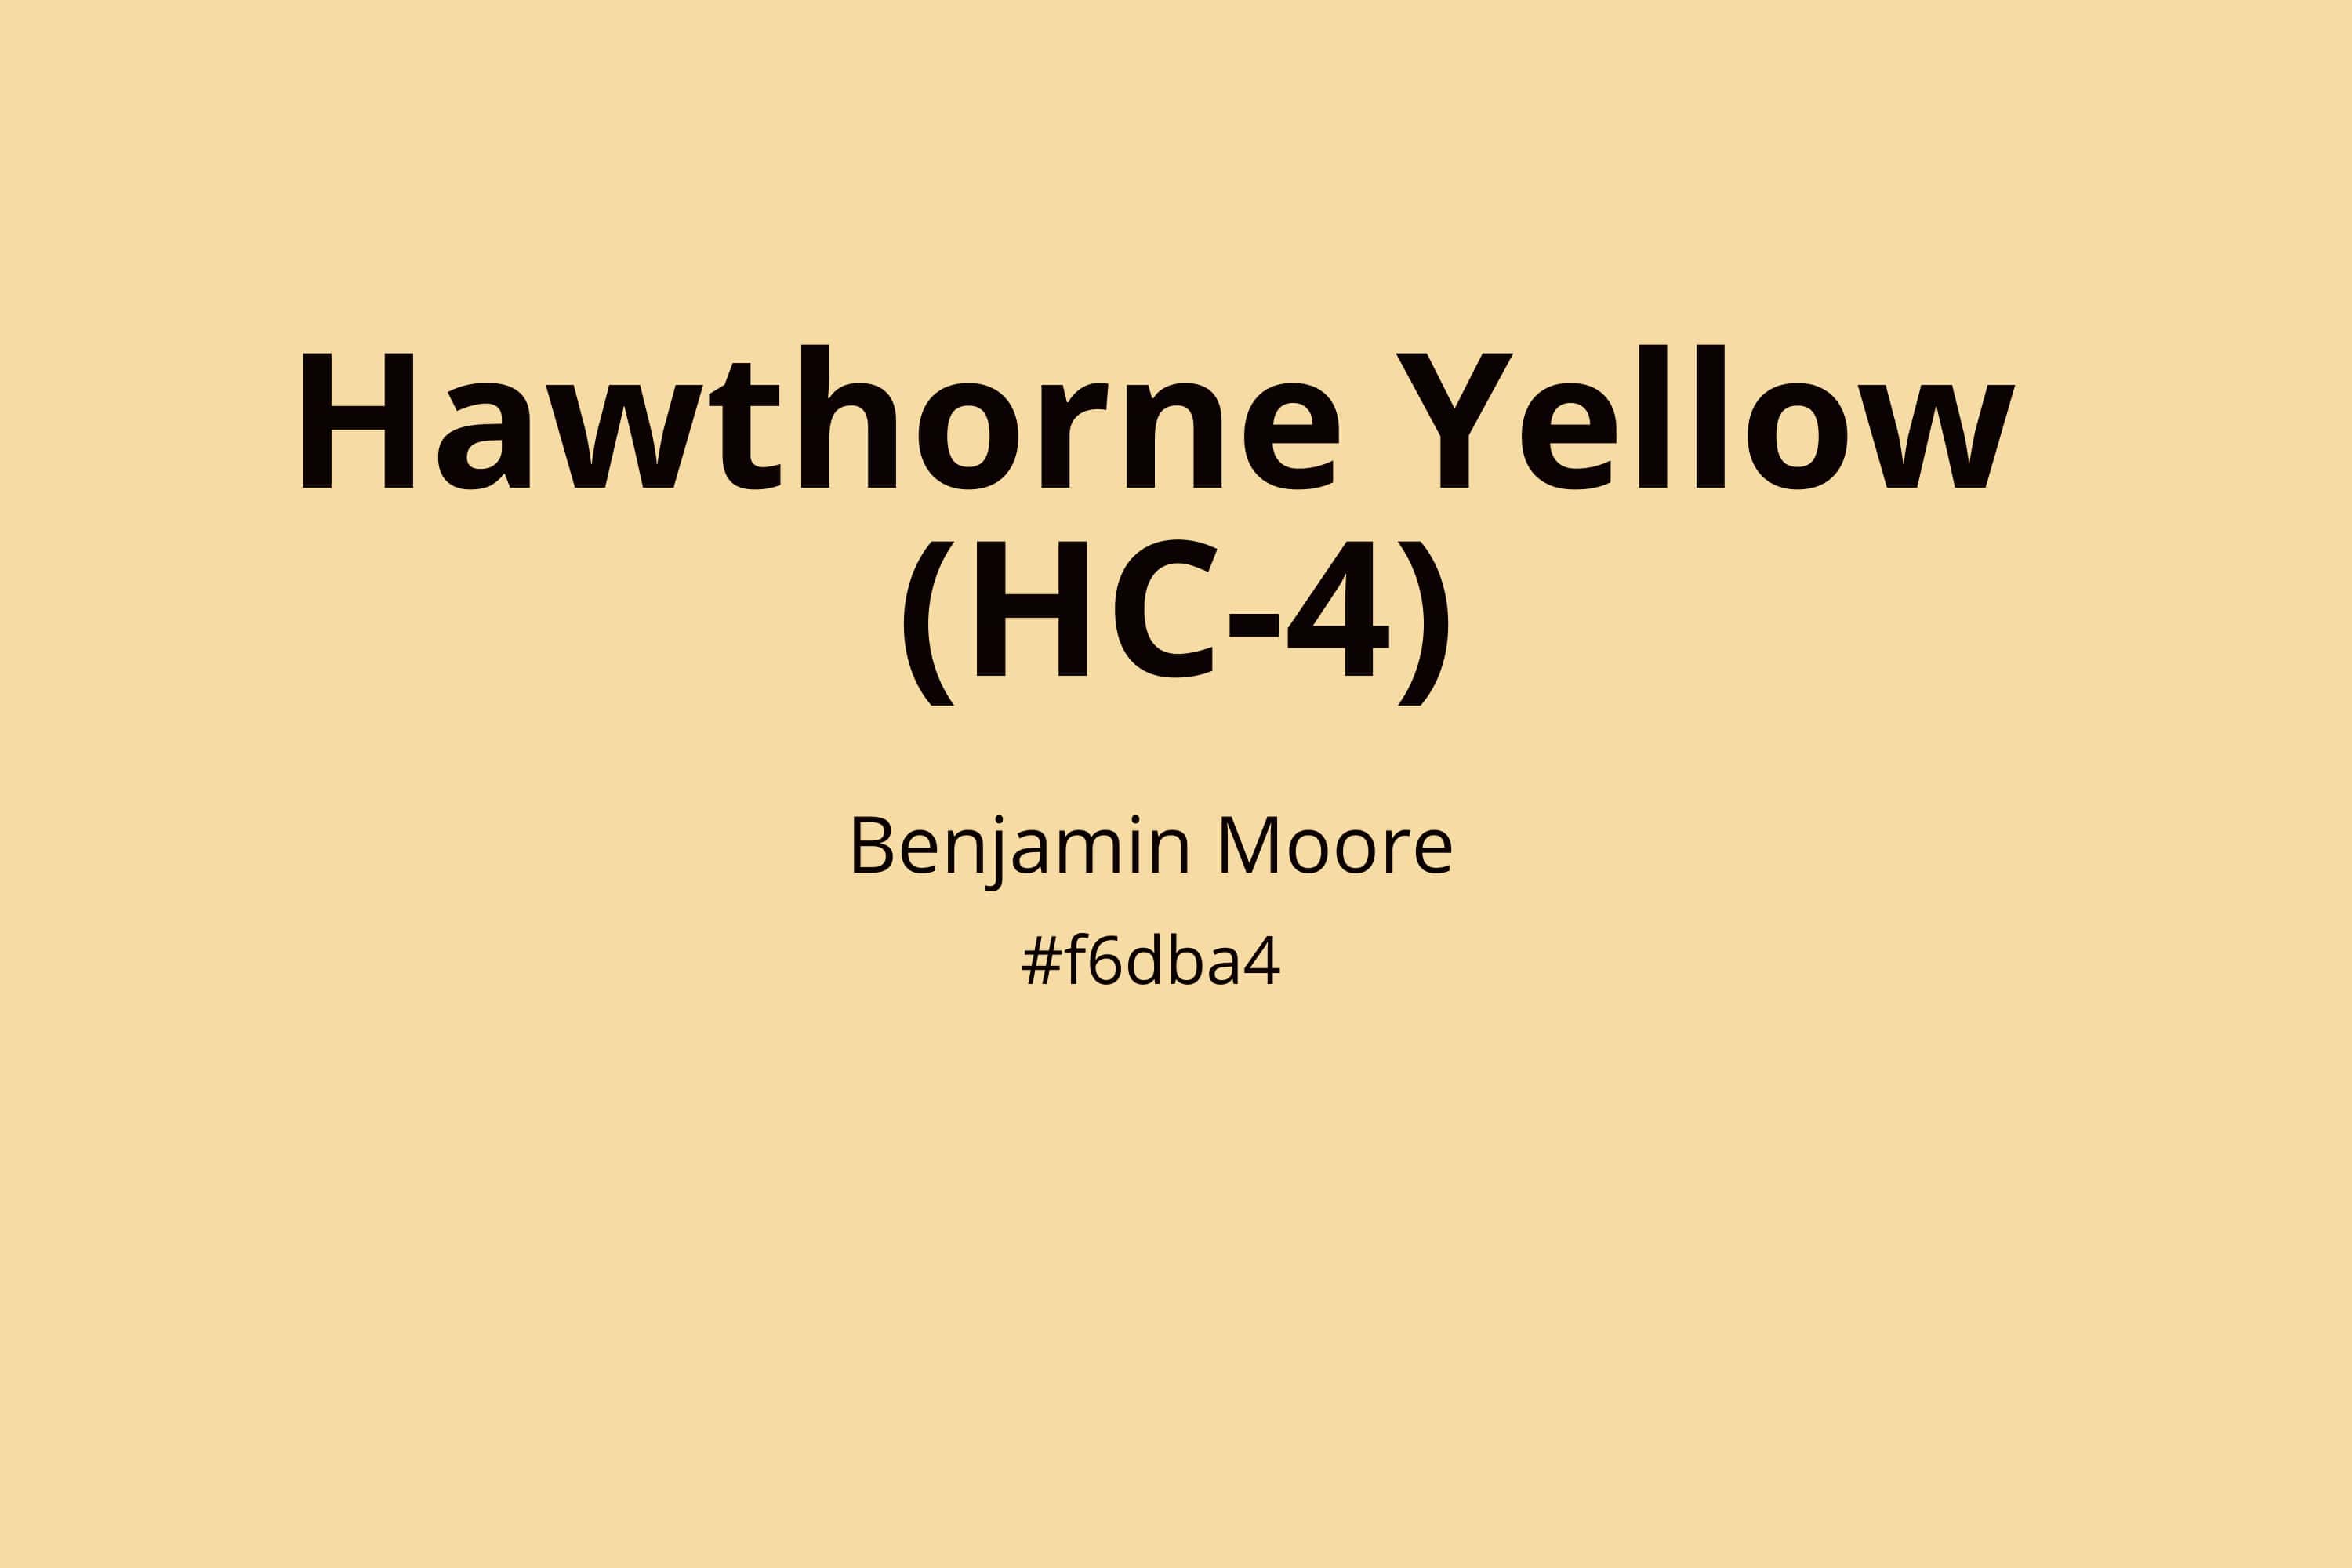 Benjamin Moore Hawthorne Yellow (HC 4)